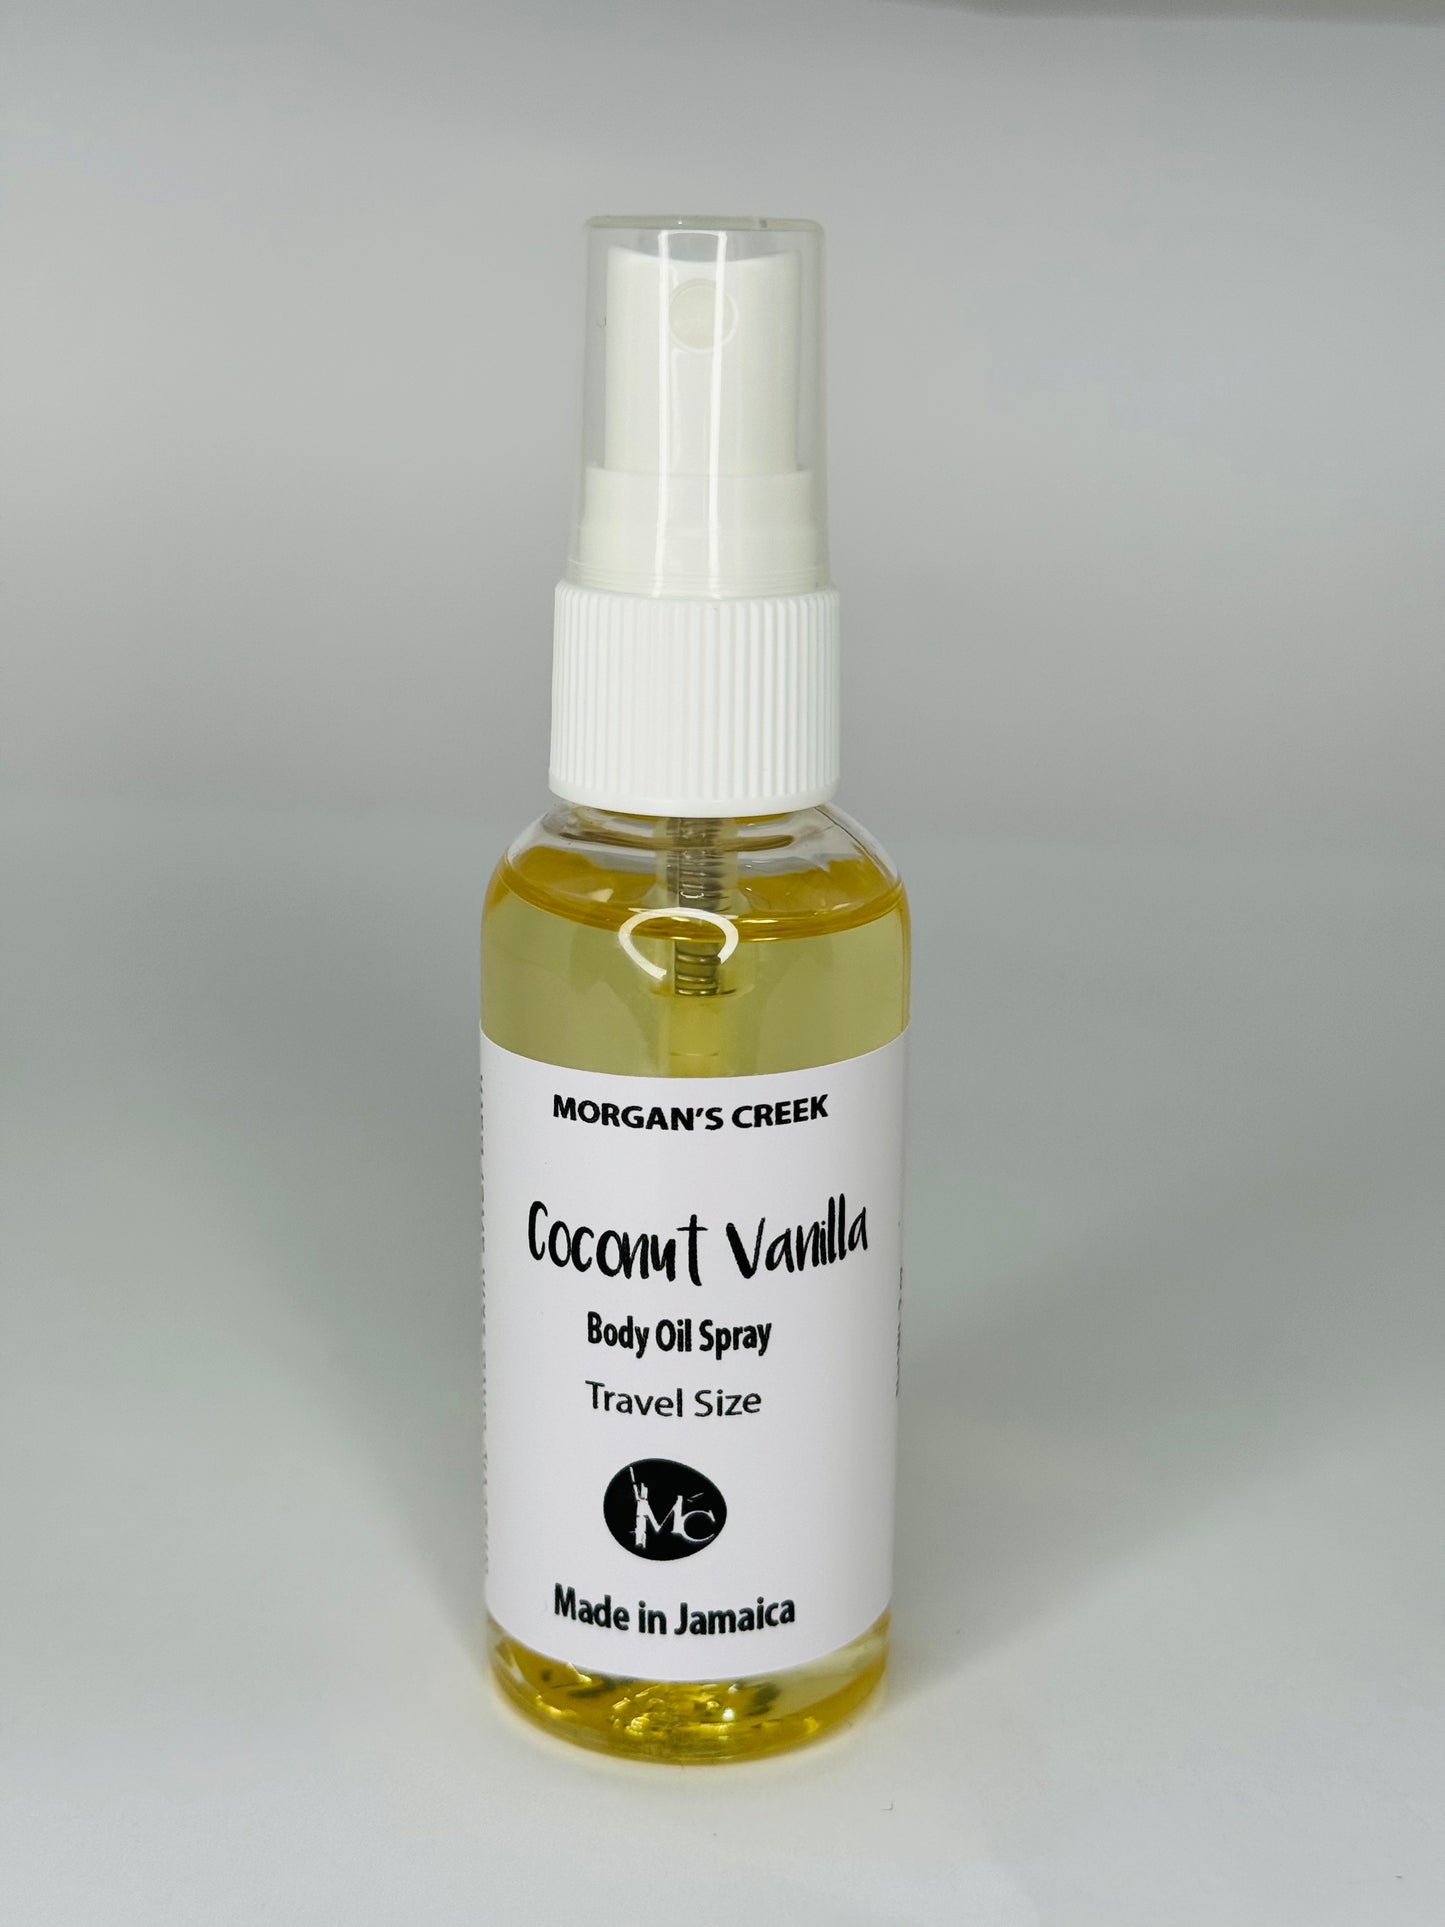 Coconut Vanilla travel size body spray oil